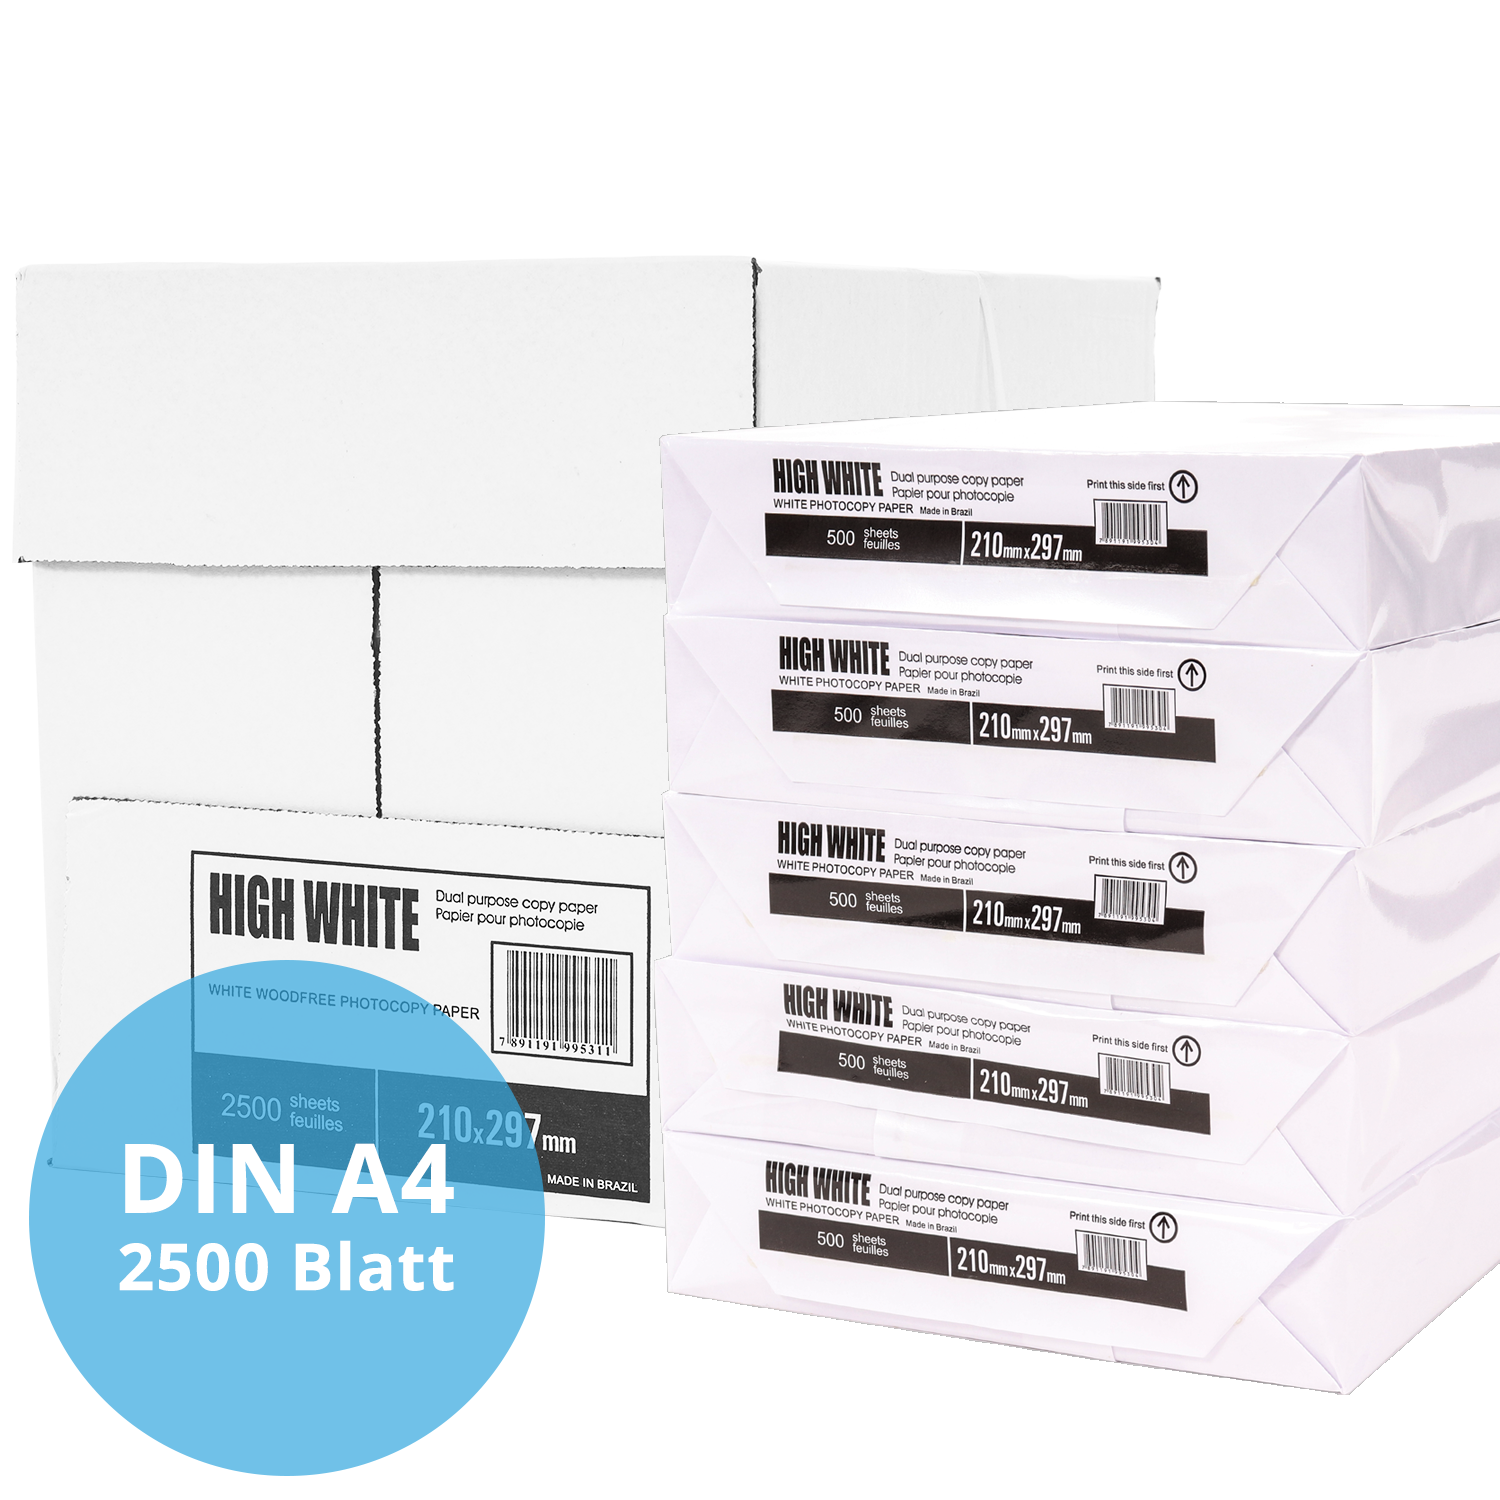 Belko® Kopierpapier Druckerpapier, DIN A4 weiß (Menge wählbar)